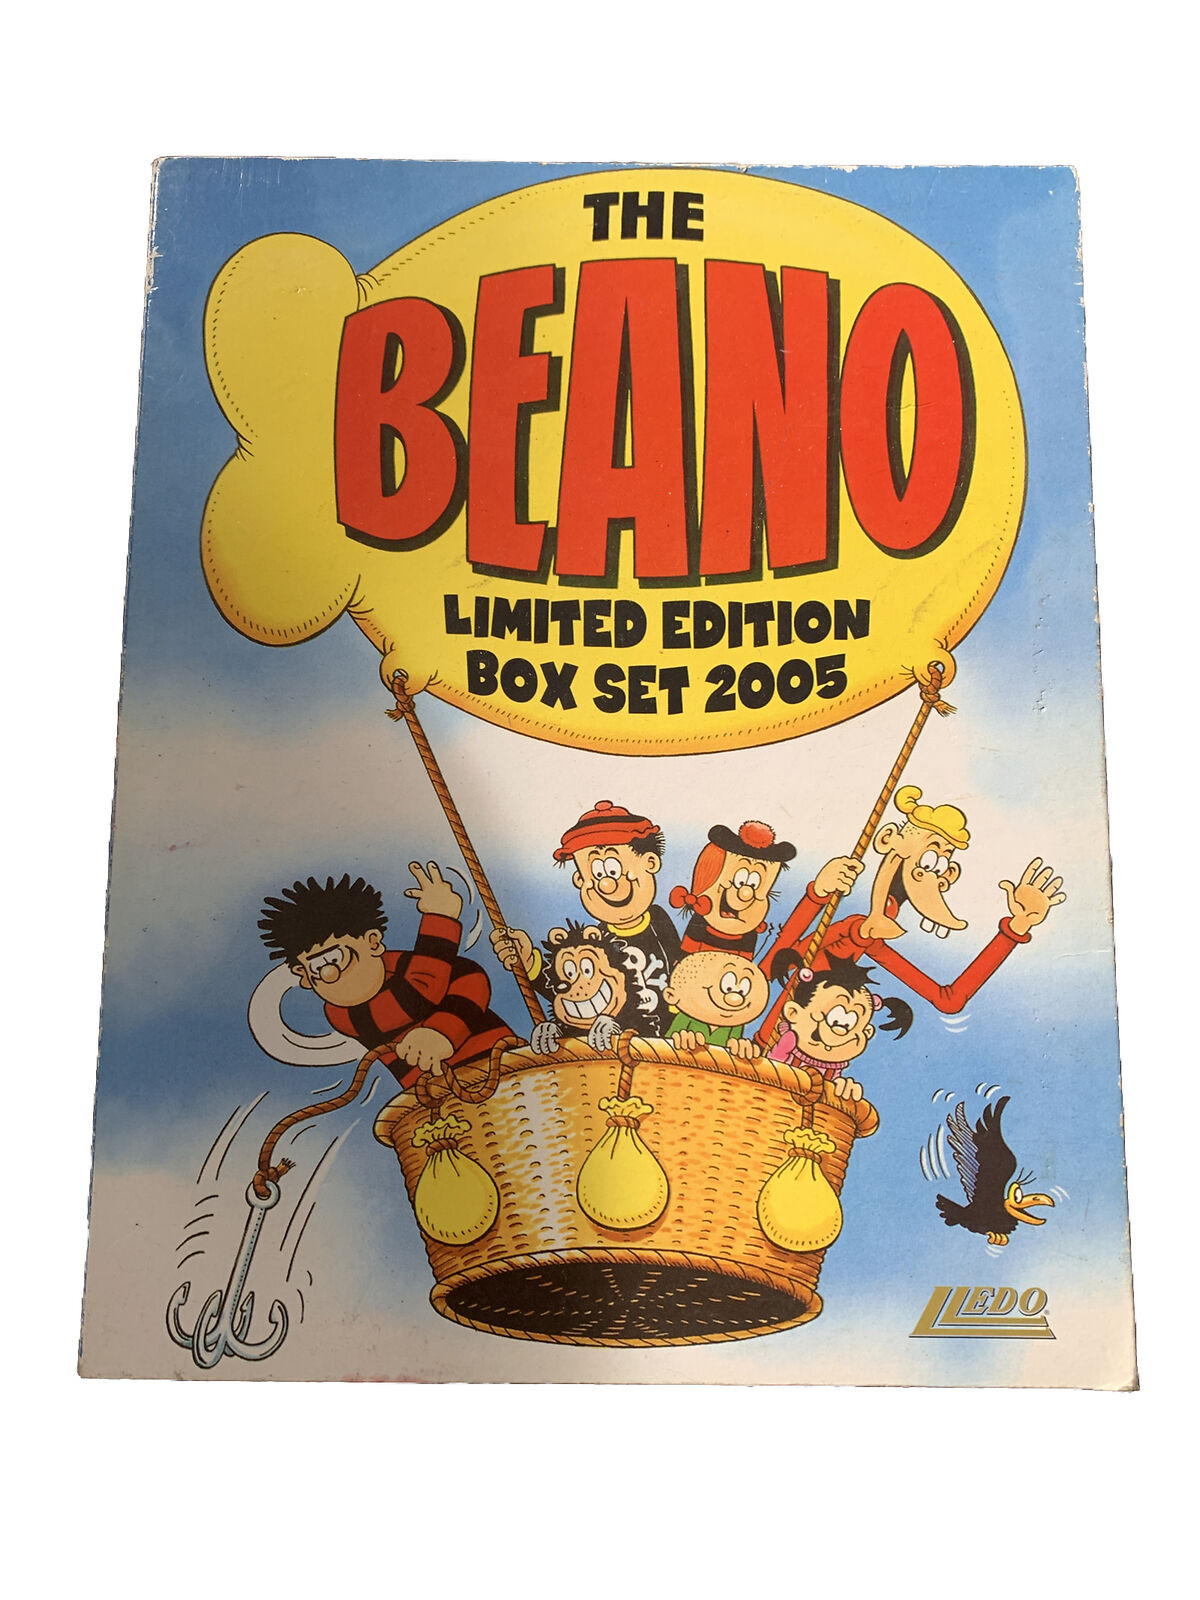 Limited Edition The Beano Box Set 2005 Lledo BNIB Diecast Set Of 4 Rare Cars